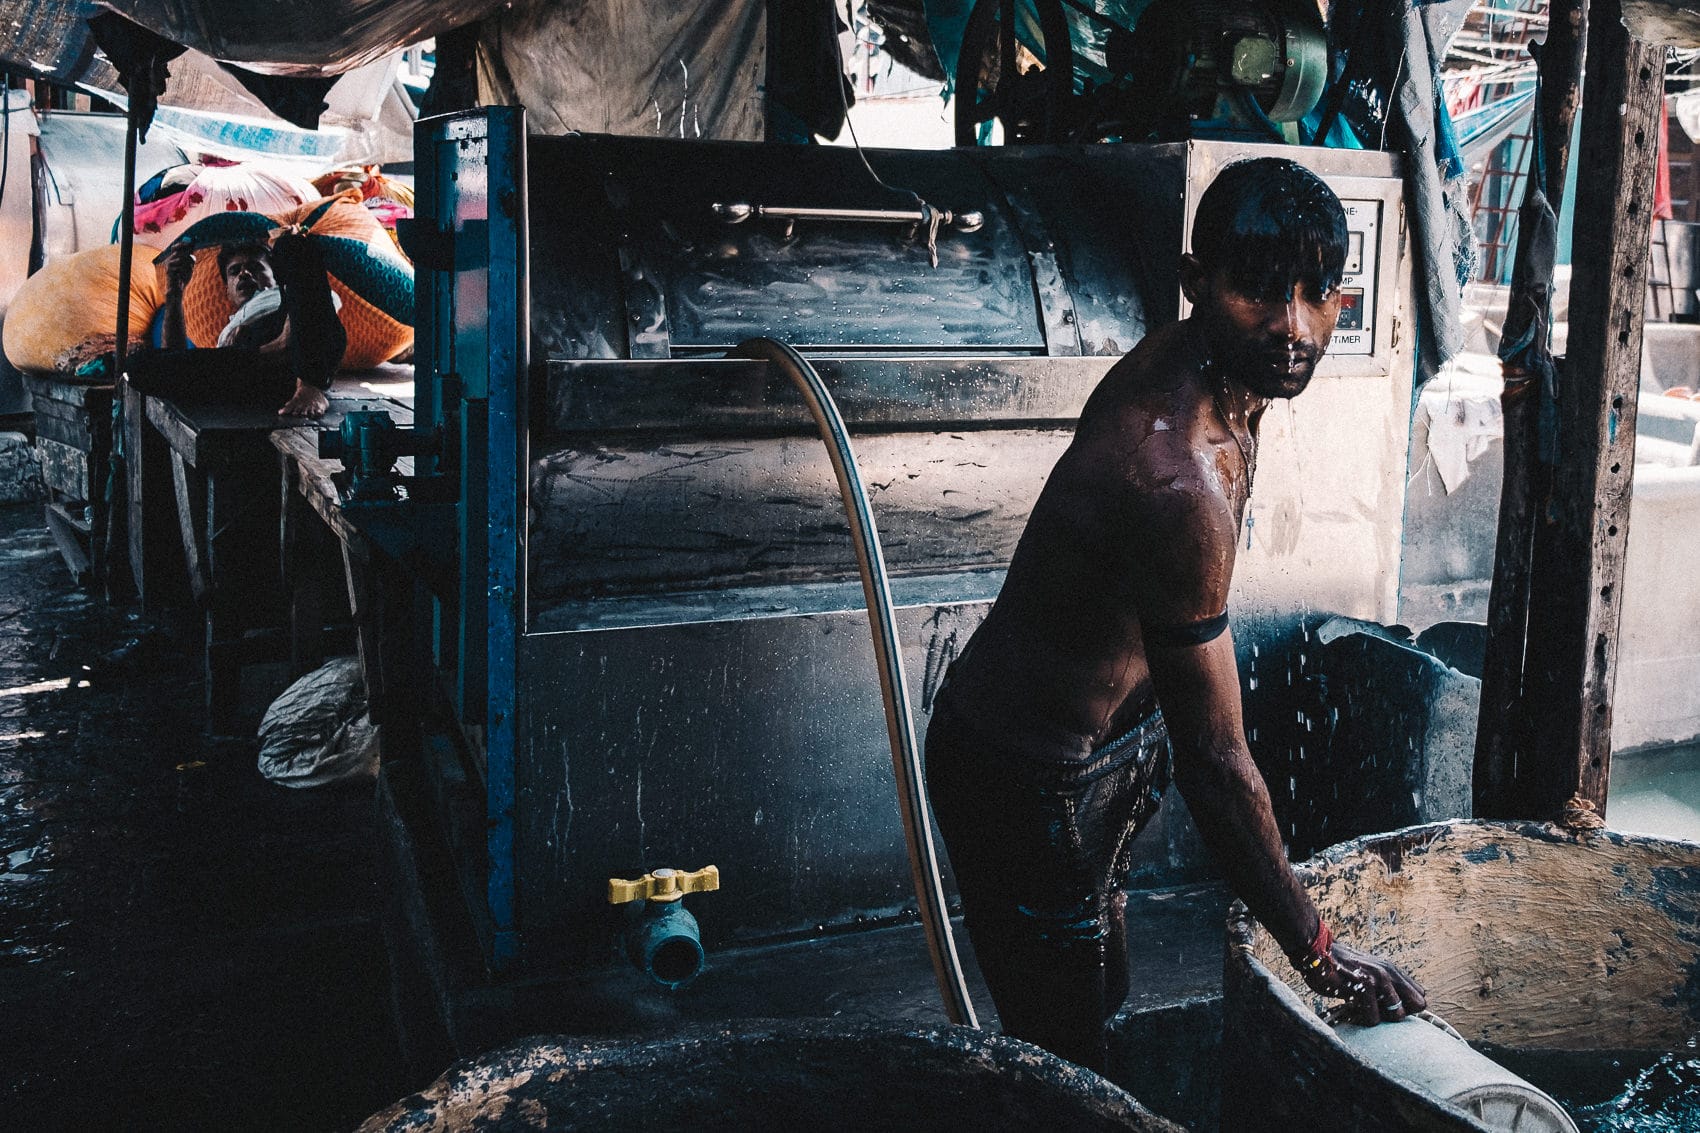 Dhobi Ghat Laundry. Mumbai, India. December 2015